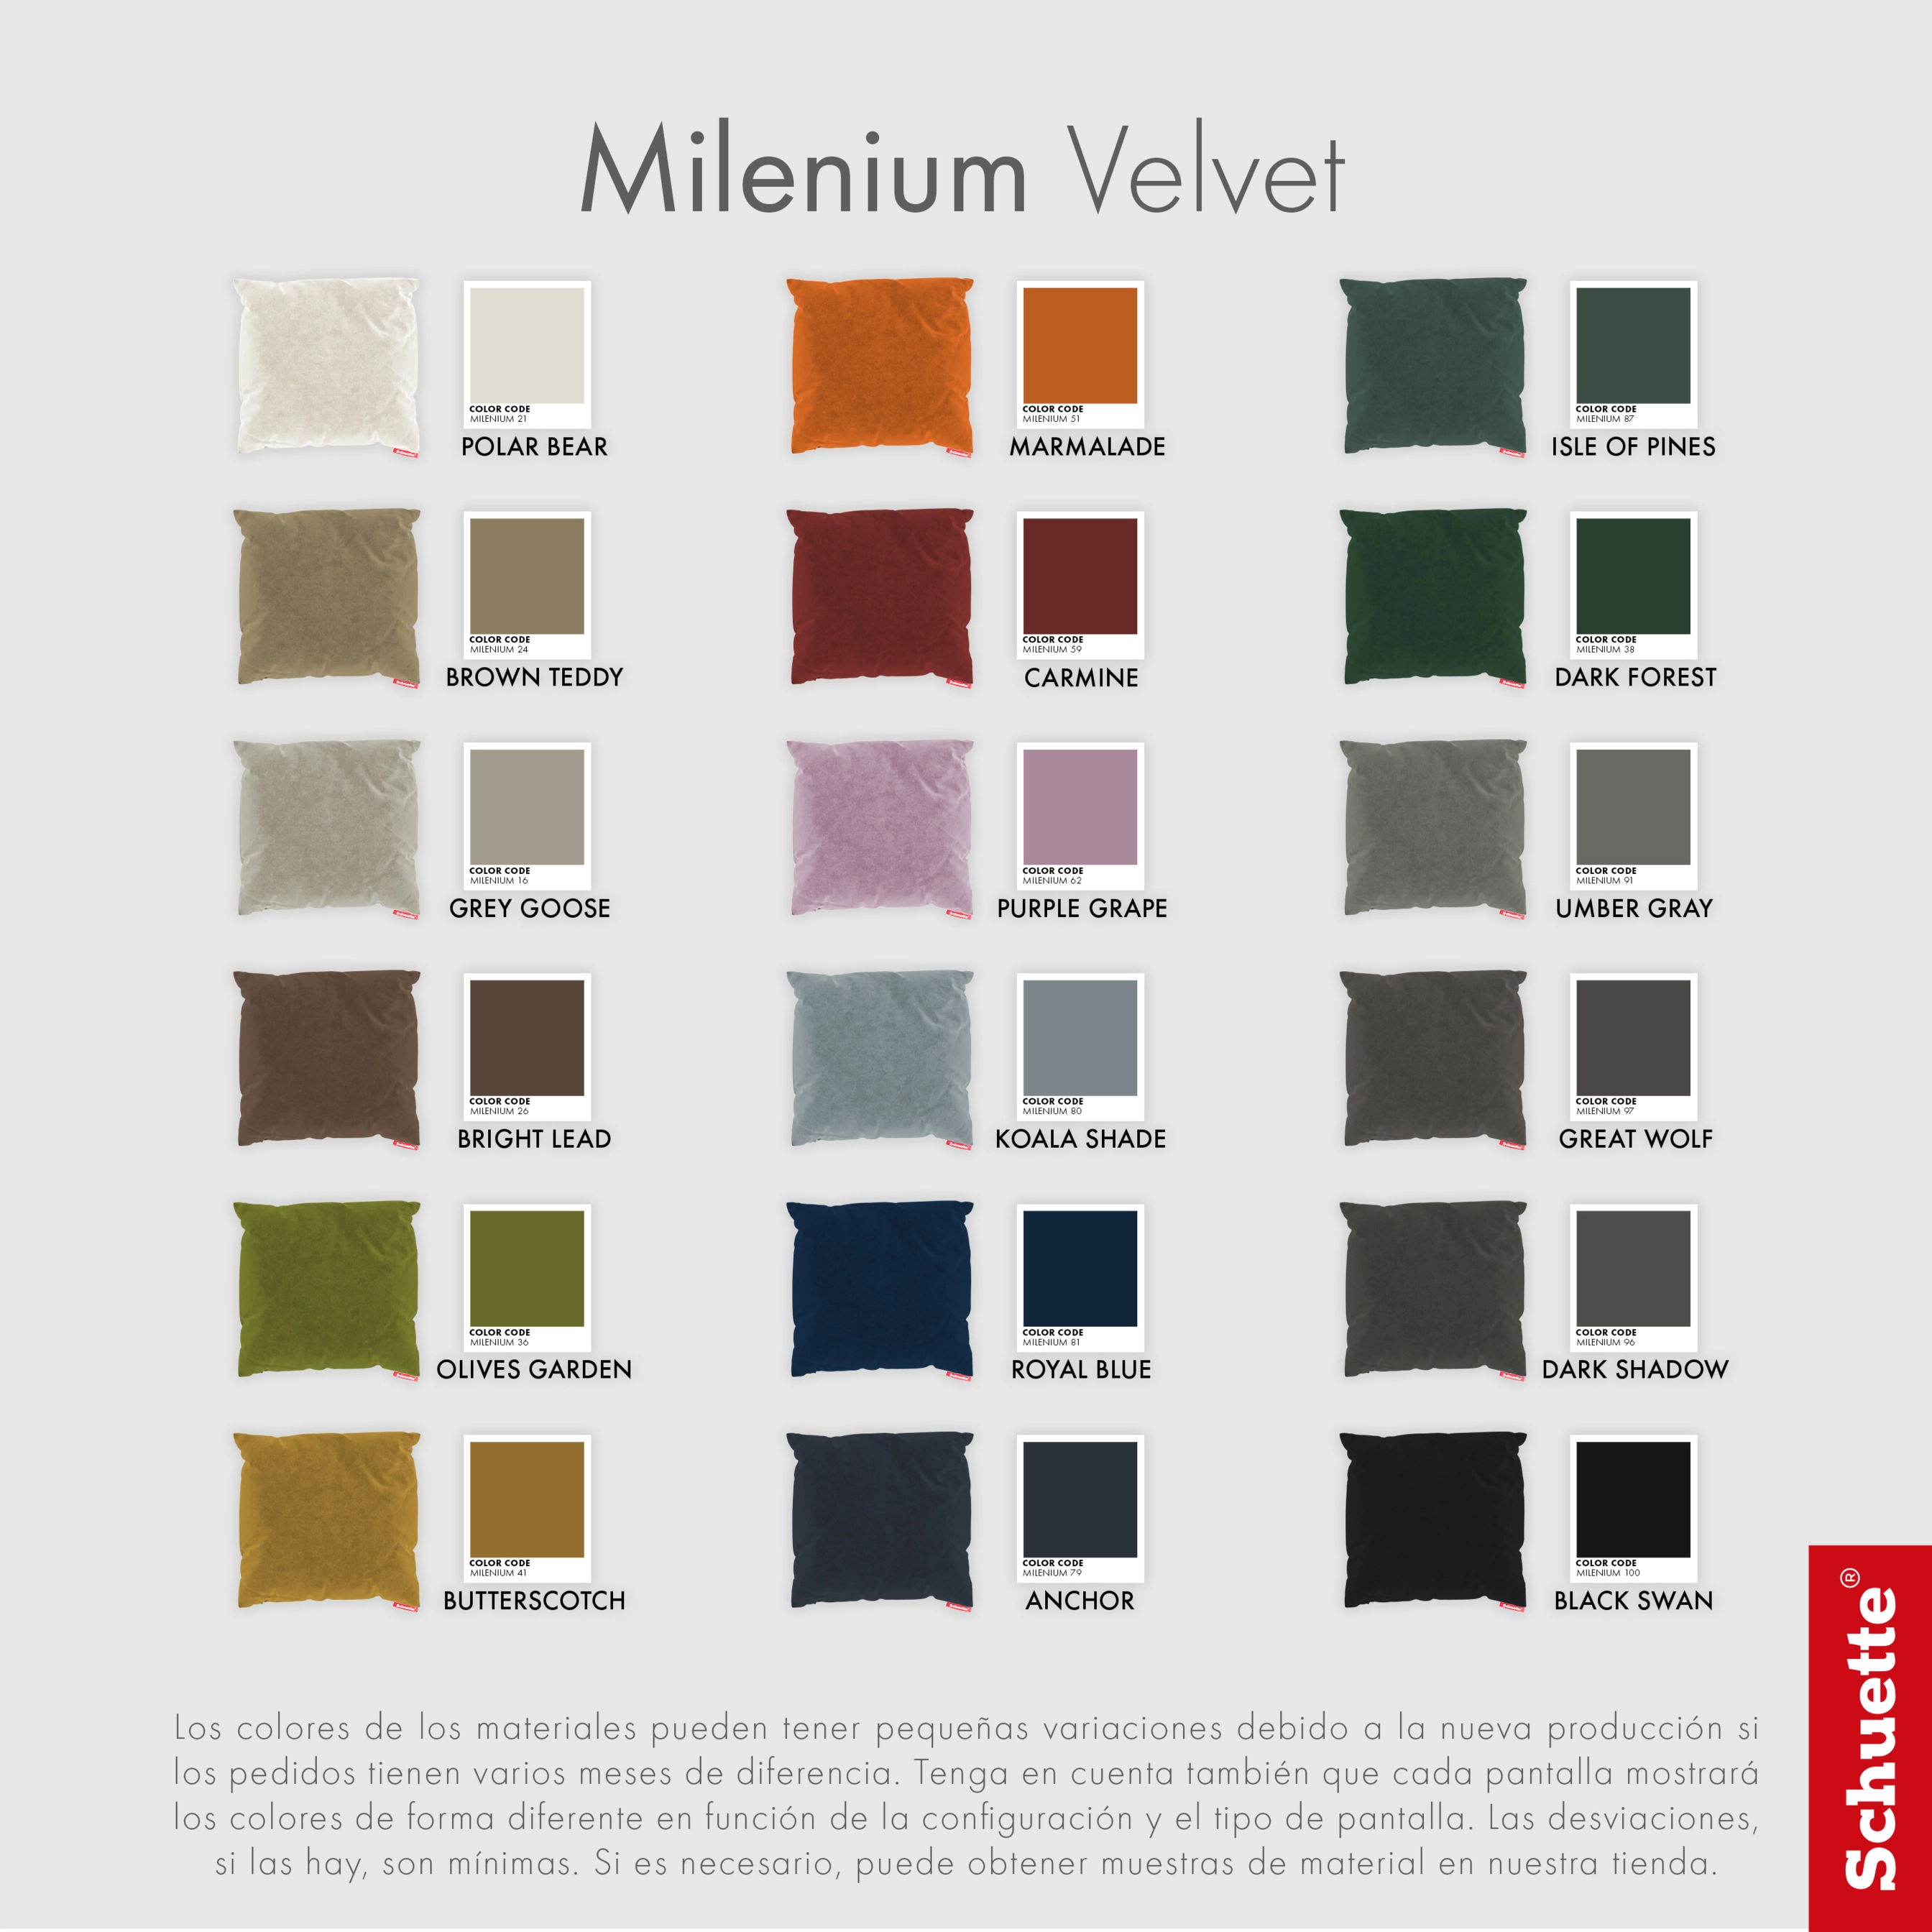 Schuette® Dekorativer Kissenbezug aus Samt mit verdecktem Reißverschluss • Millenium Velvet Kollektion: Carmine (Red) • Knitterfrei • Kuschelweich